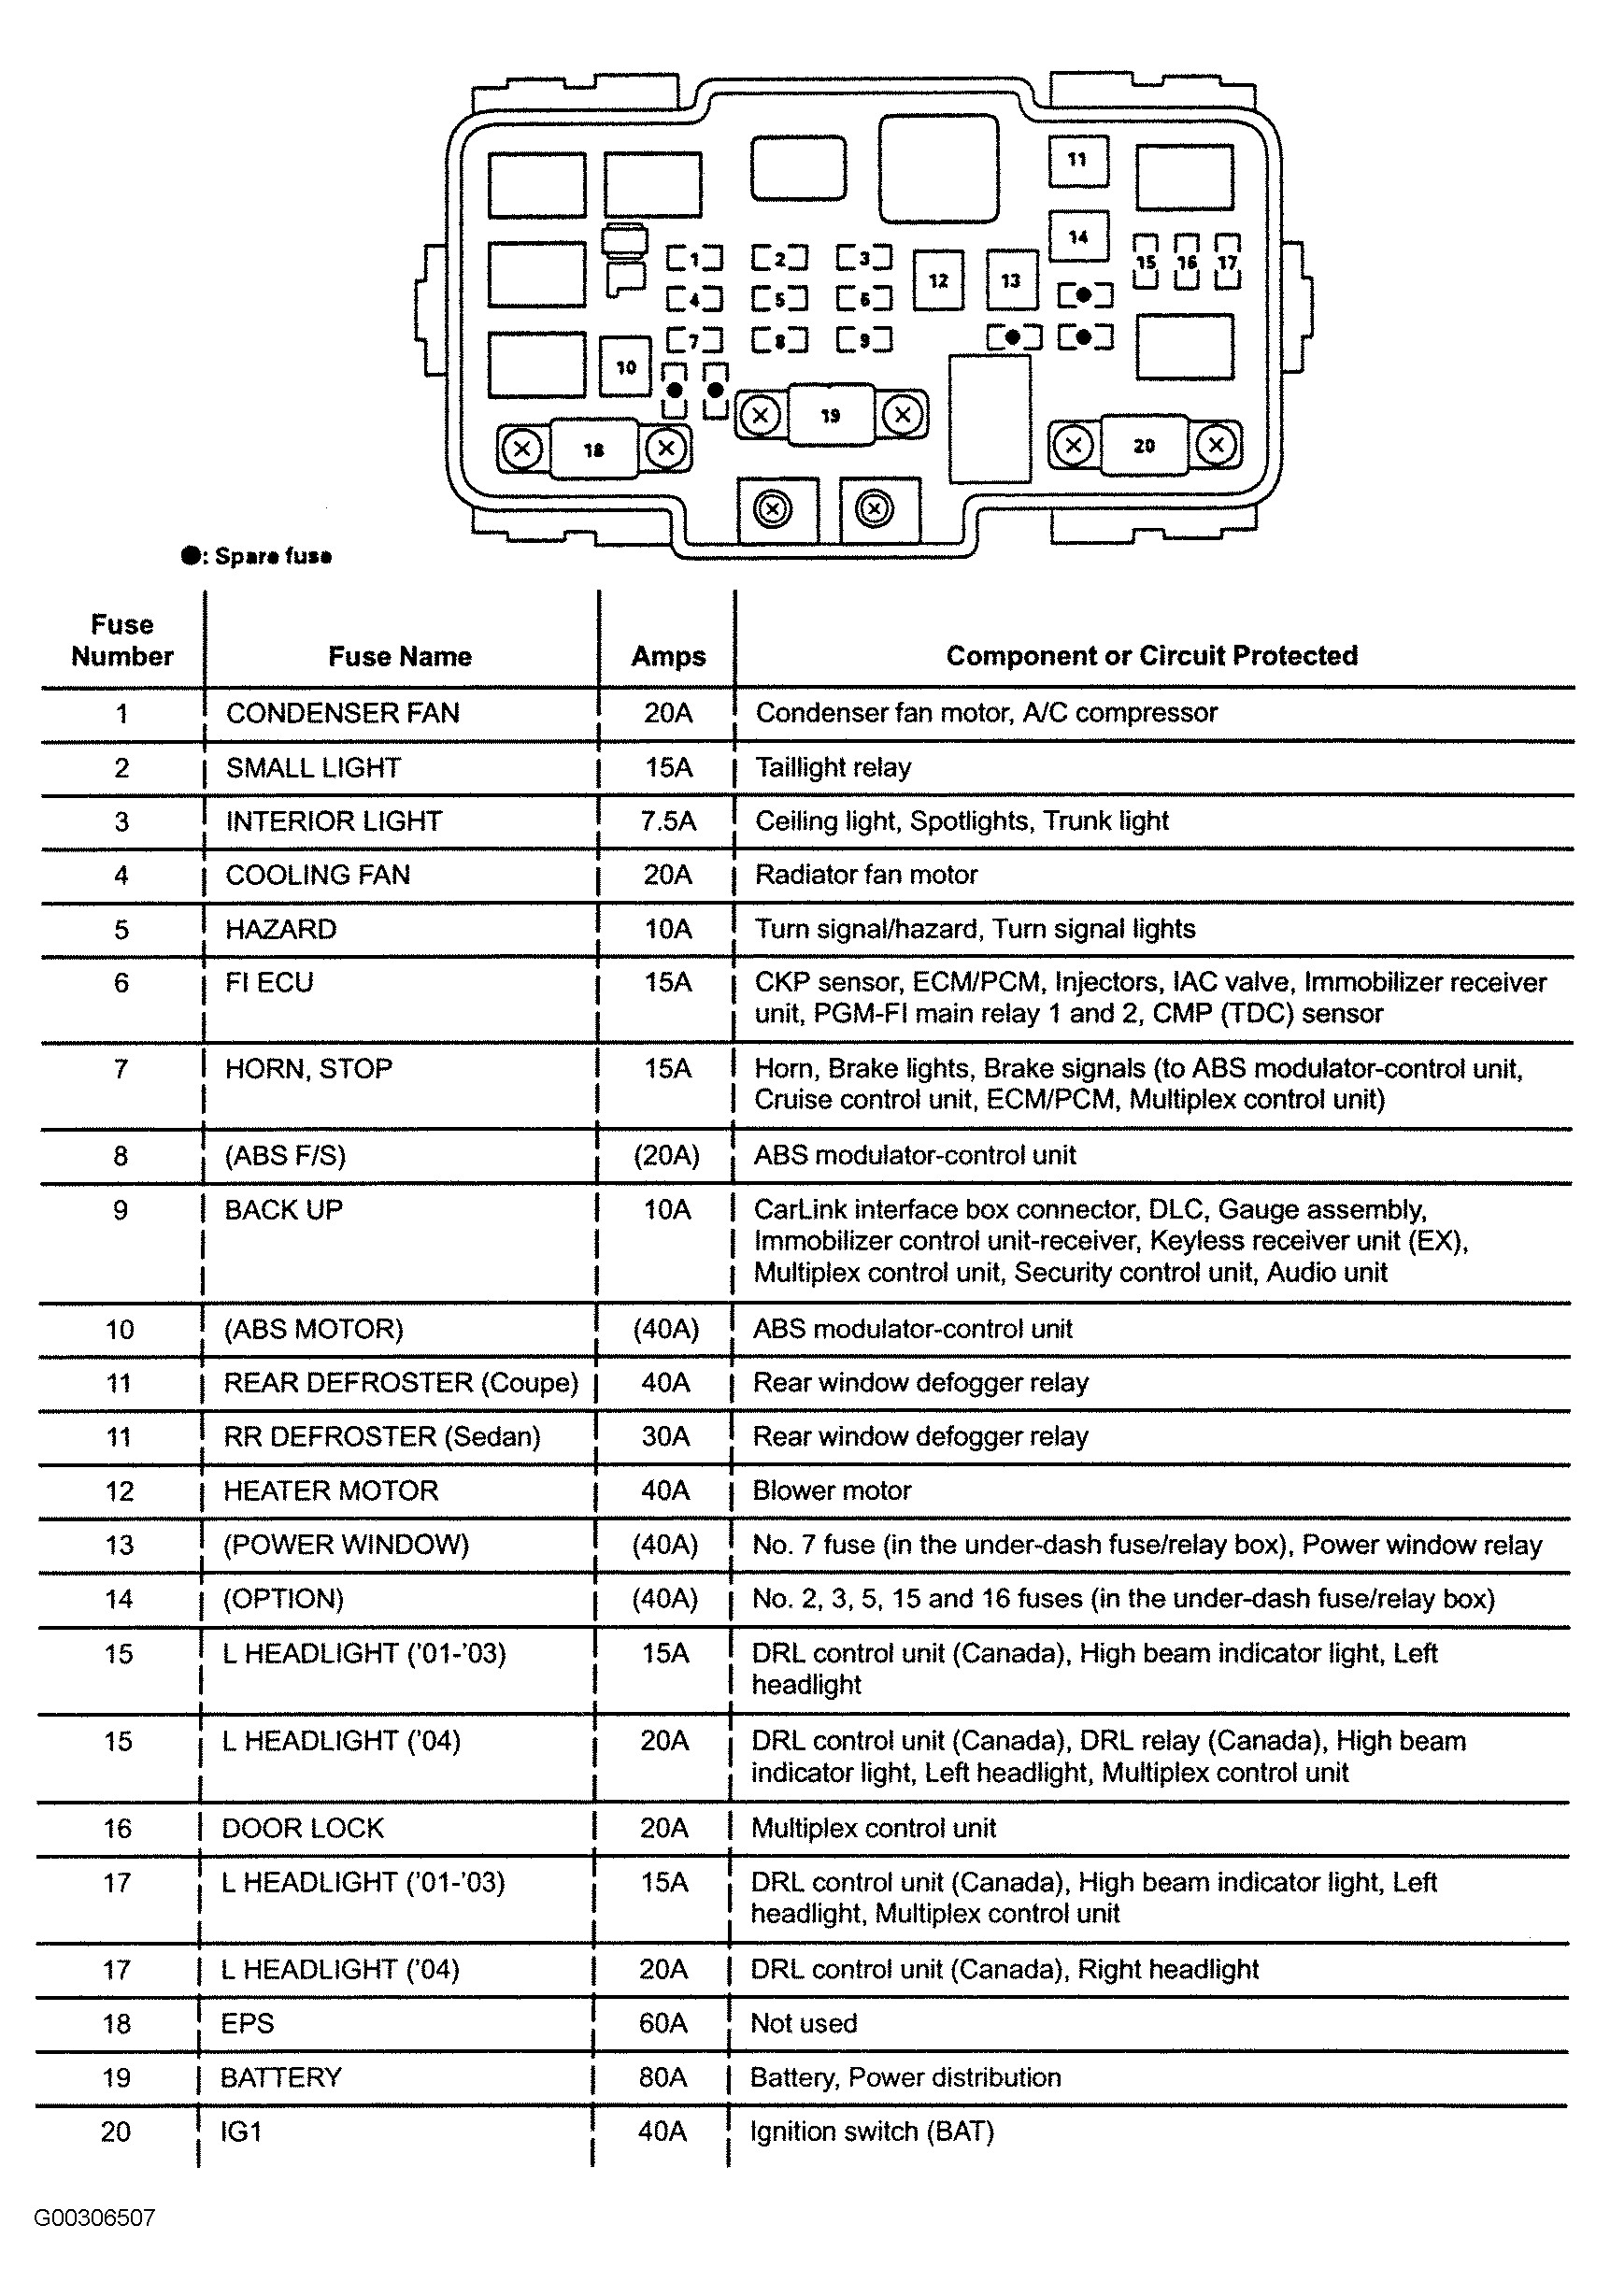 1996 Honda Civic Engine Diagram 07 Honda Civic Fuse Diagram Box Enticing Reference Graphic Present Of 1996 Honda Civic Engine Diagram